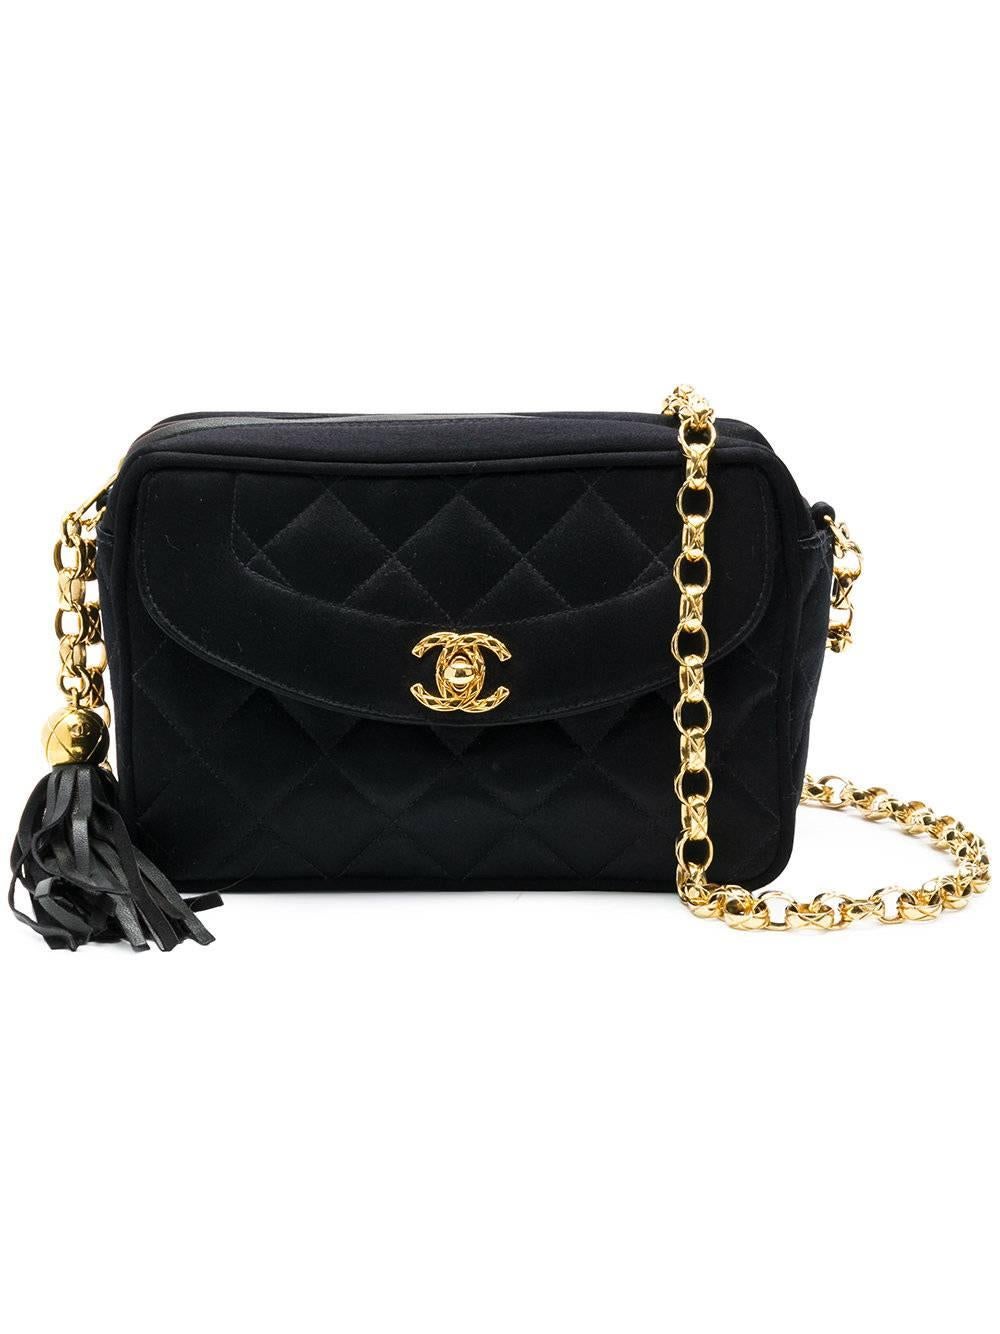 Chanel Black Satin Camera Bag 4